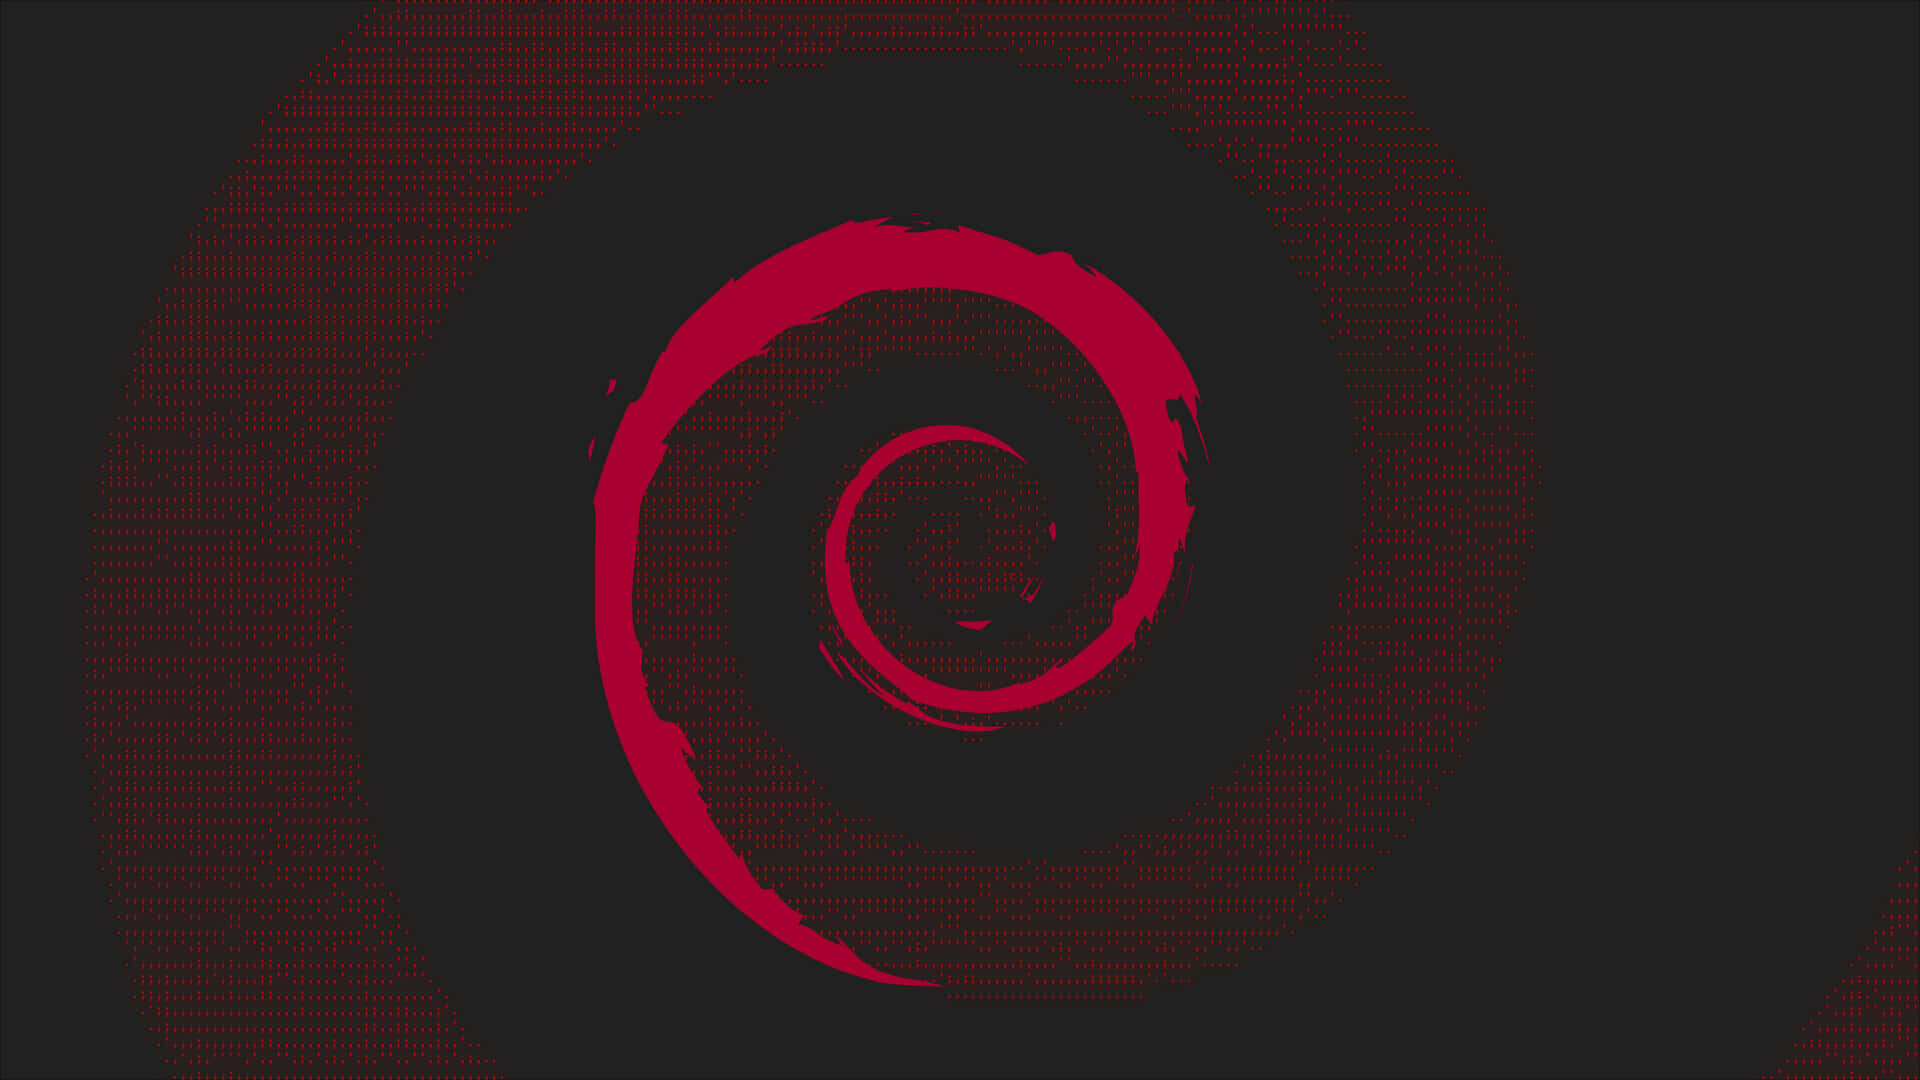 Enjoy a powerful experience of Ubuntu 4K. Wallpaper